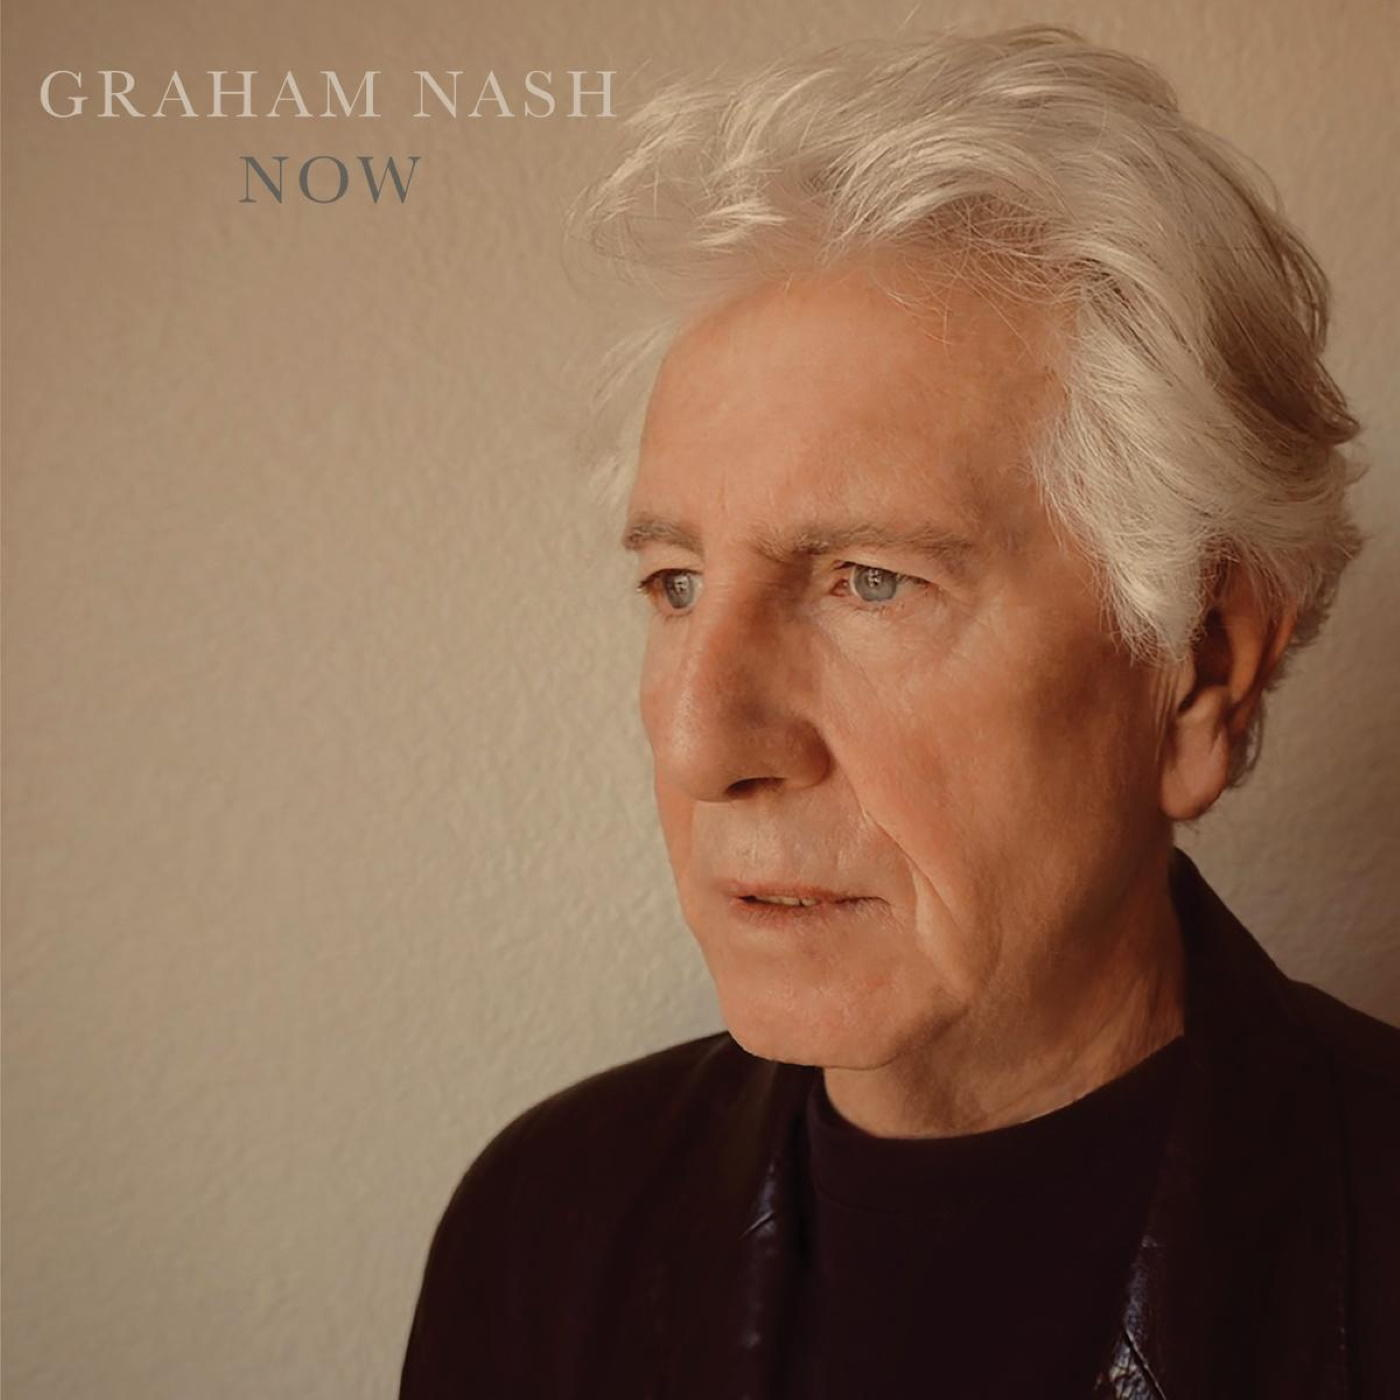 - Graham (Vinyl) Now - Nash